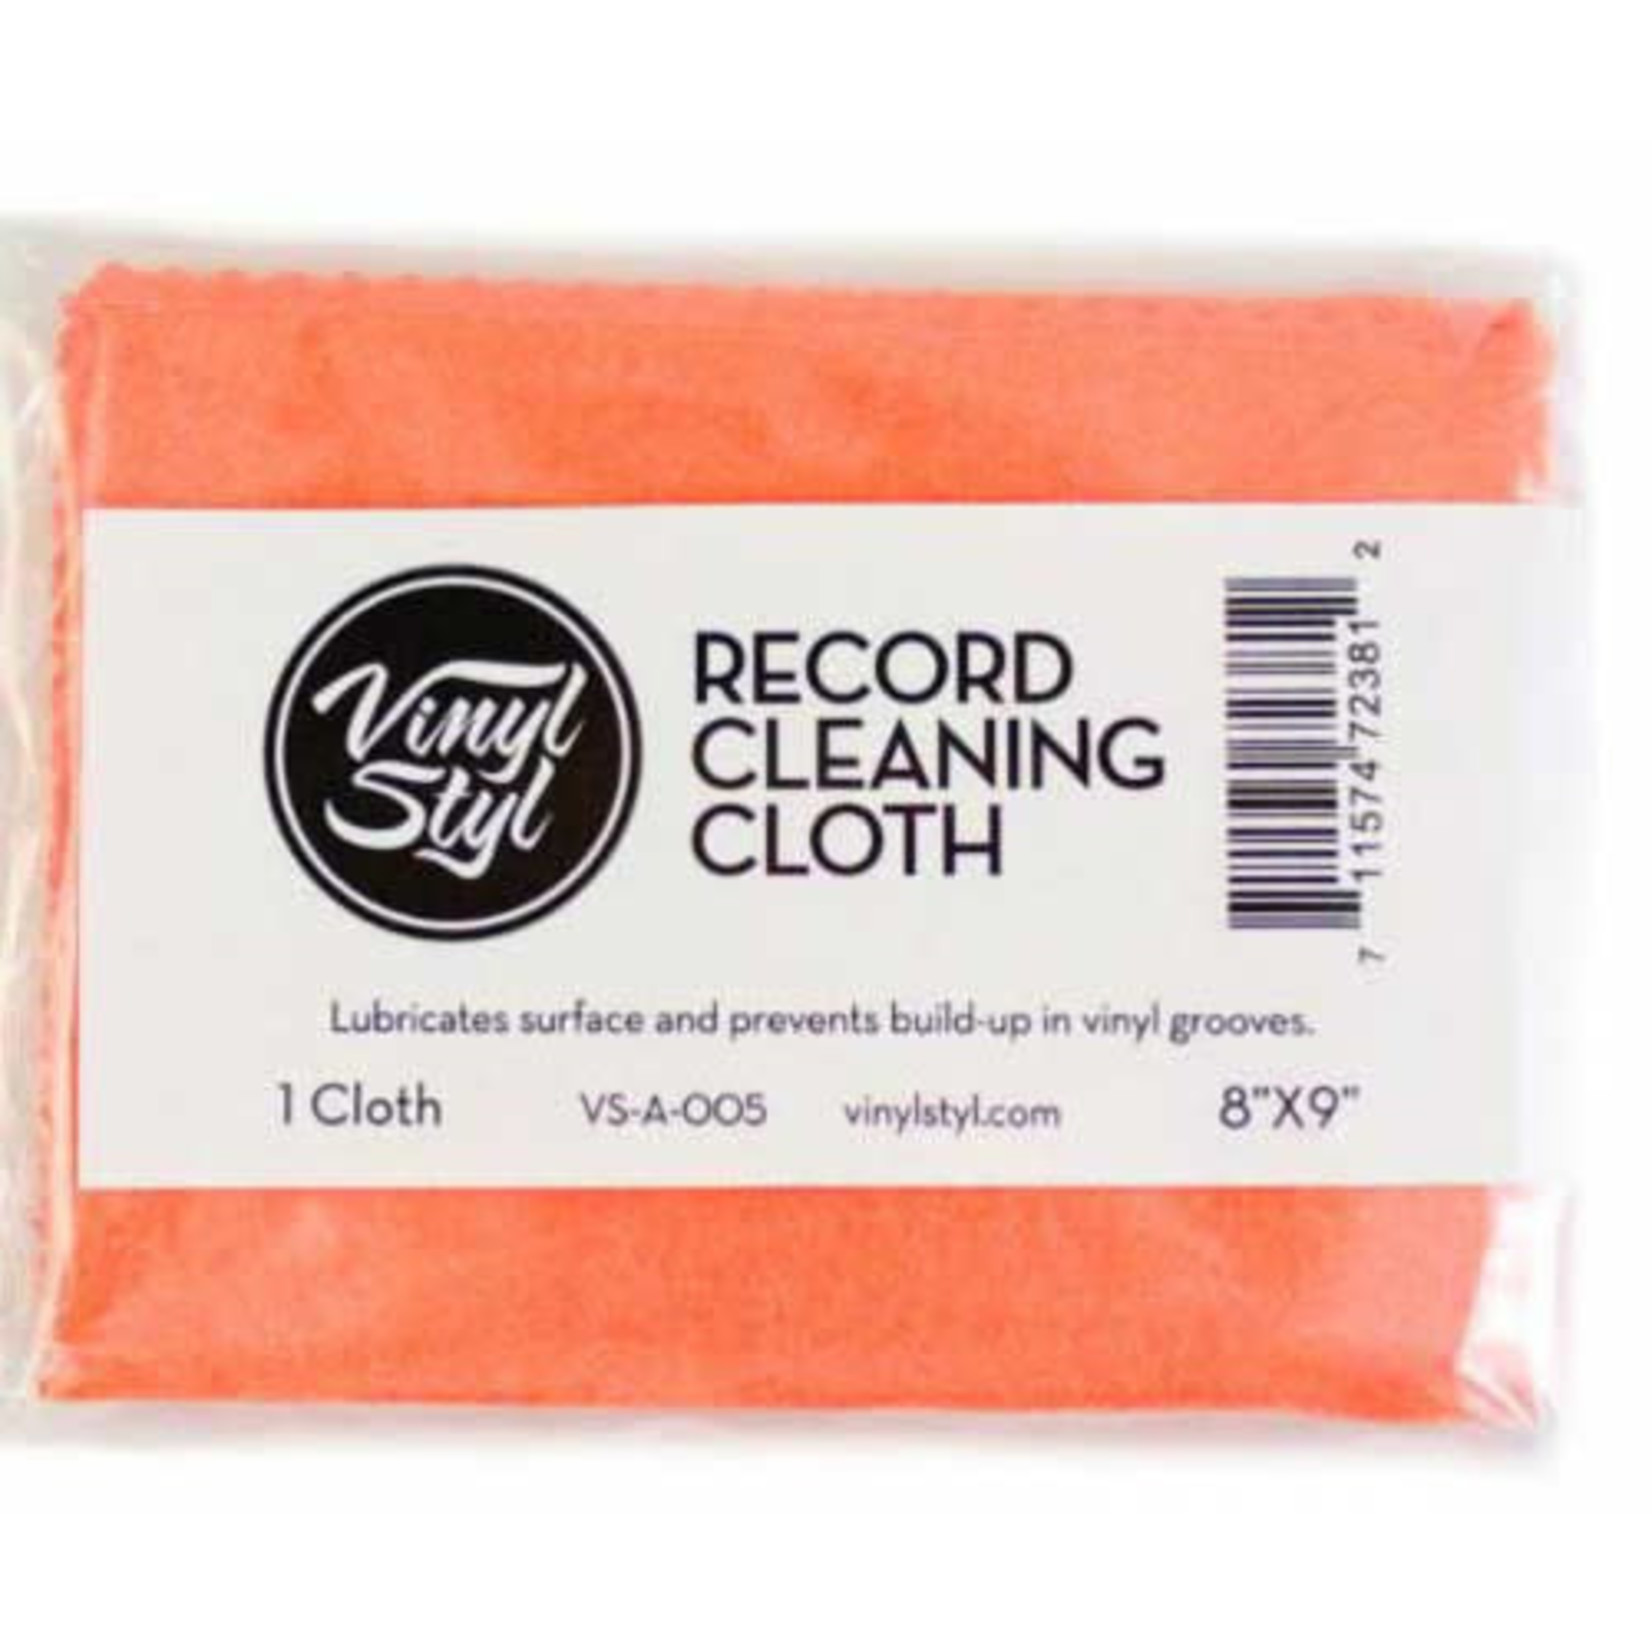 Vinyl Styl Vinyl Styl - Record Cleaning Cloth